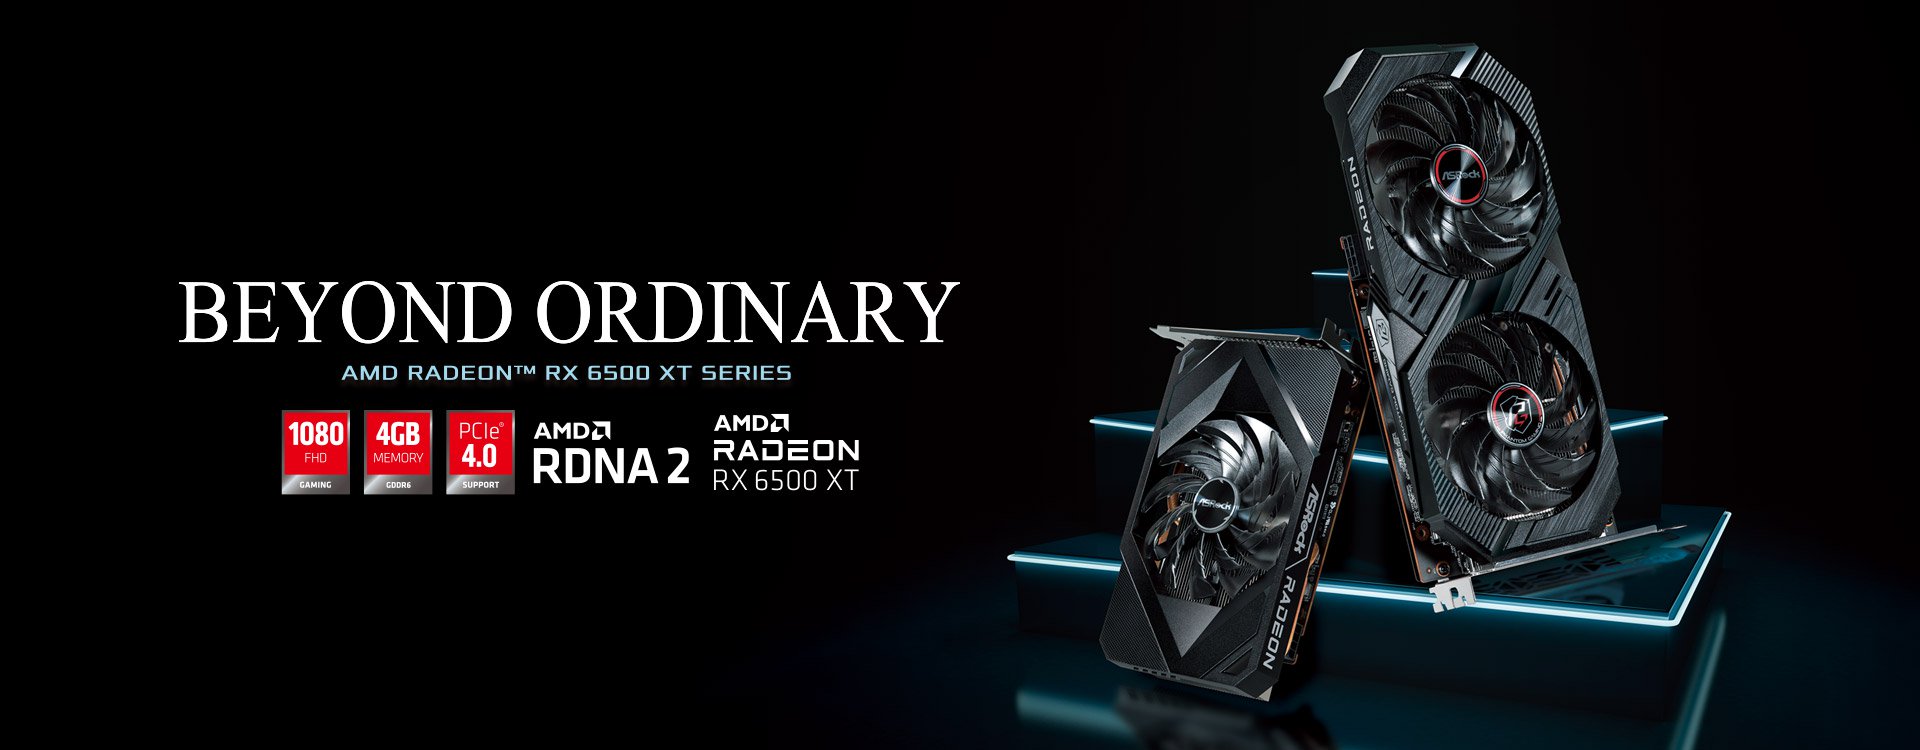 AMD Radeon RX 6500XT Launch